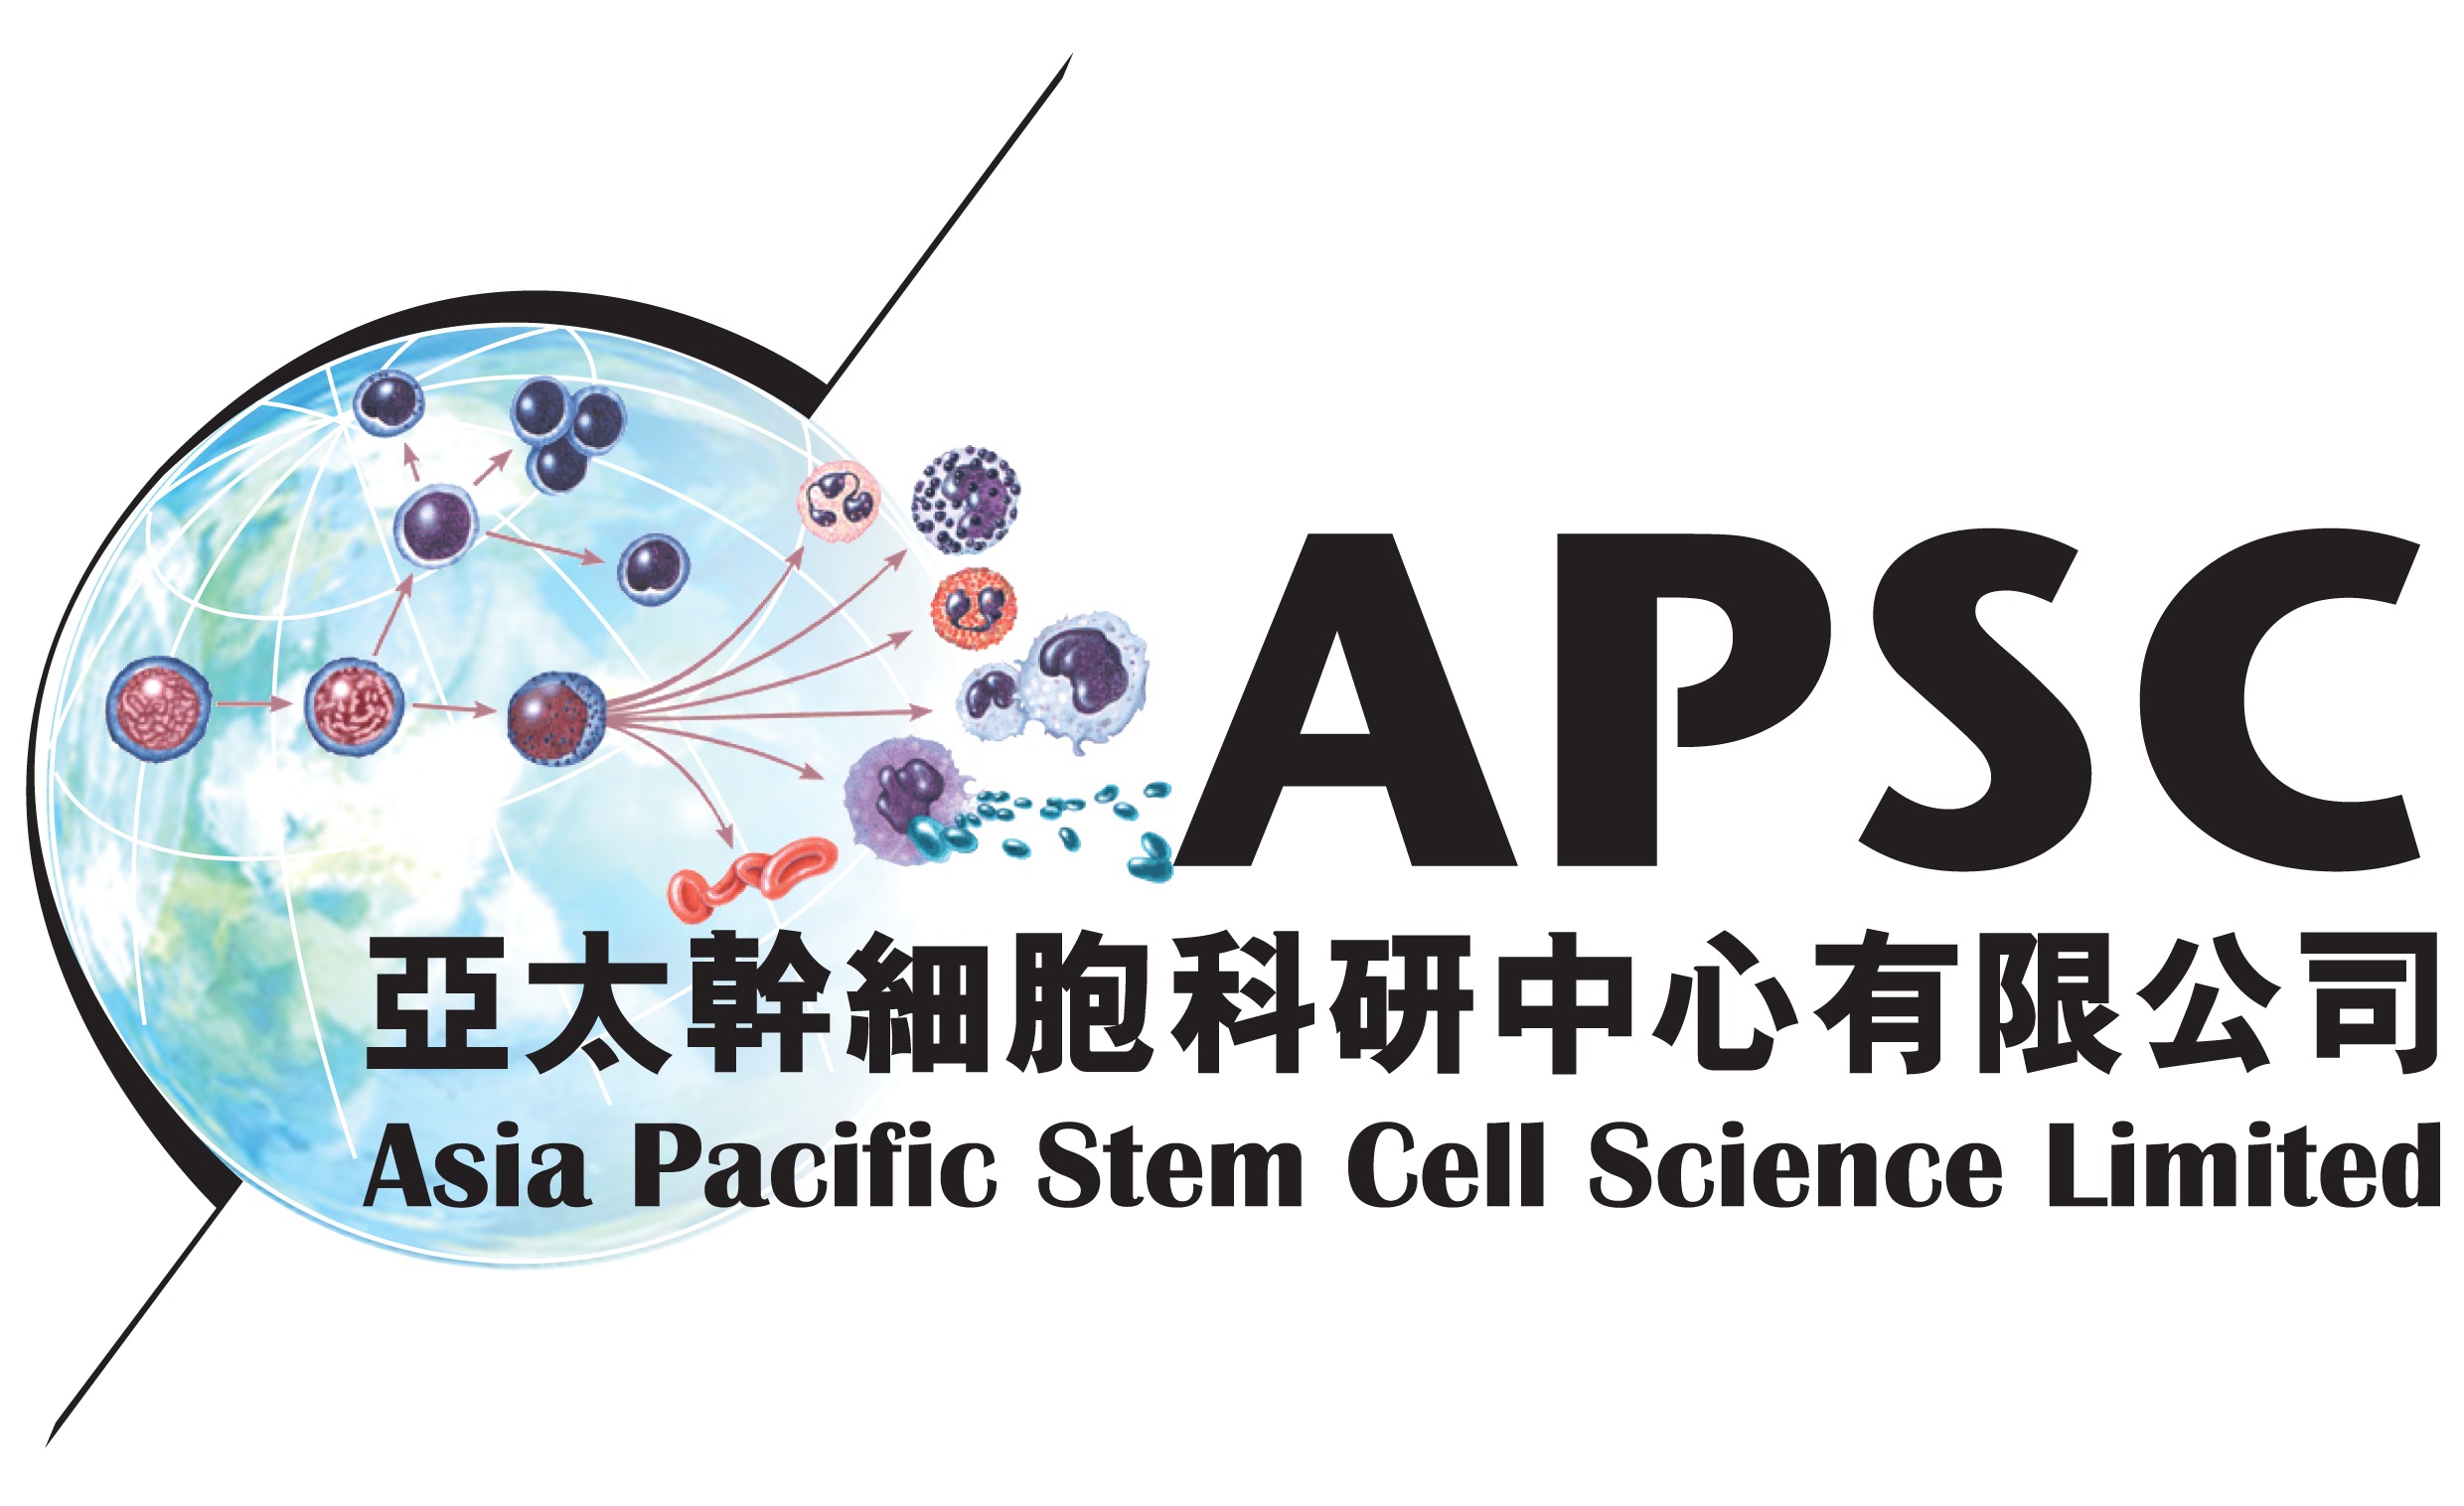 0-APSC logo-psd.jpg